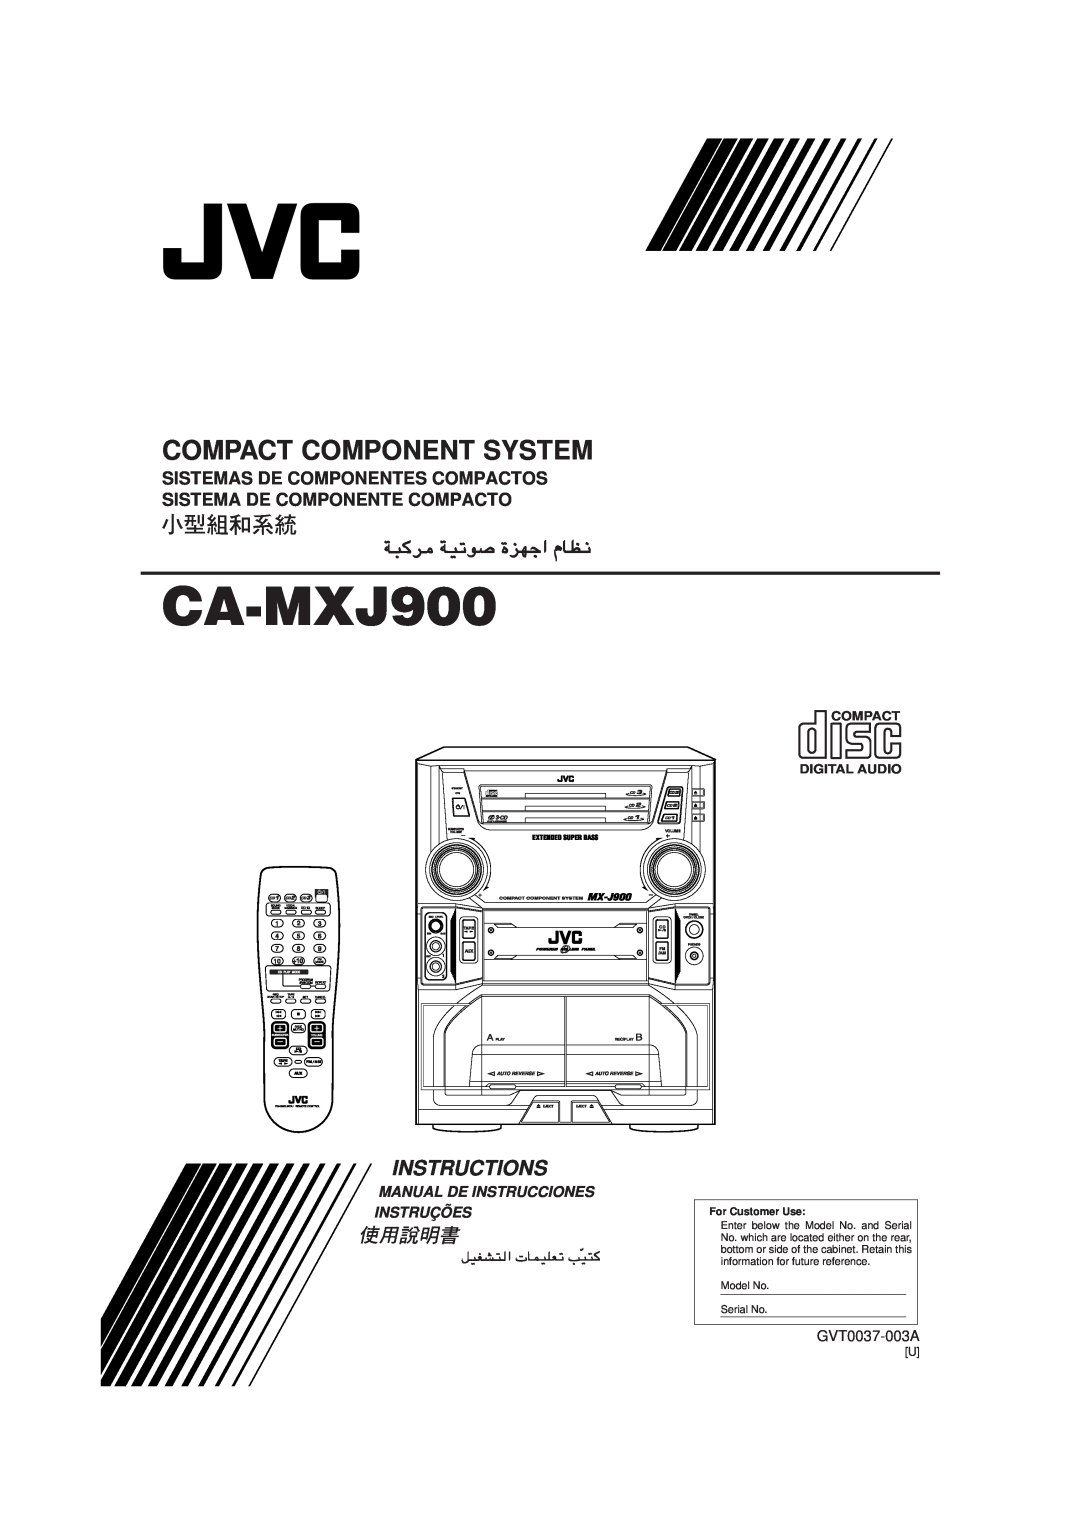 JVC manual Instructions, Systeme De Composants Compact, MX-J900- Consists of CA-MXJ900and SP-MXJ900, GVT0037-002A 